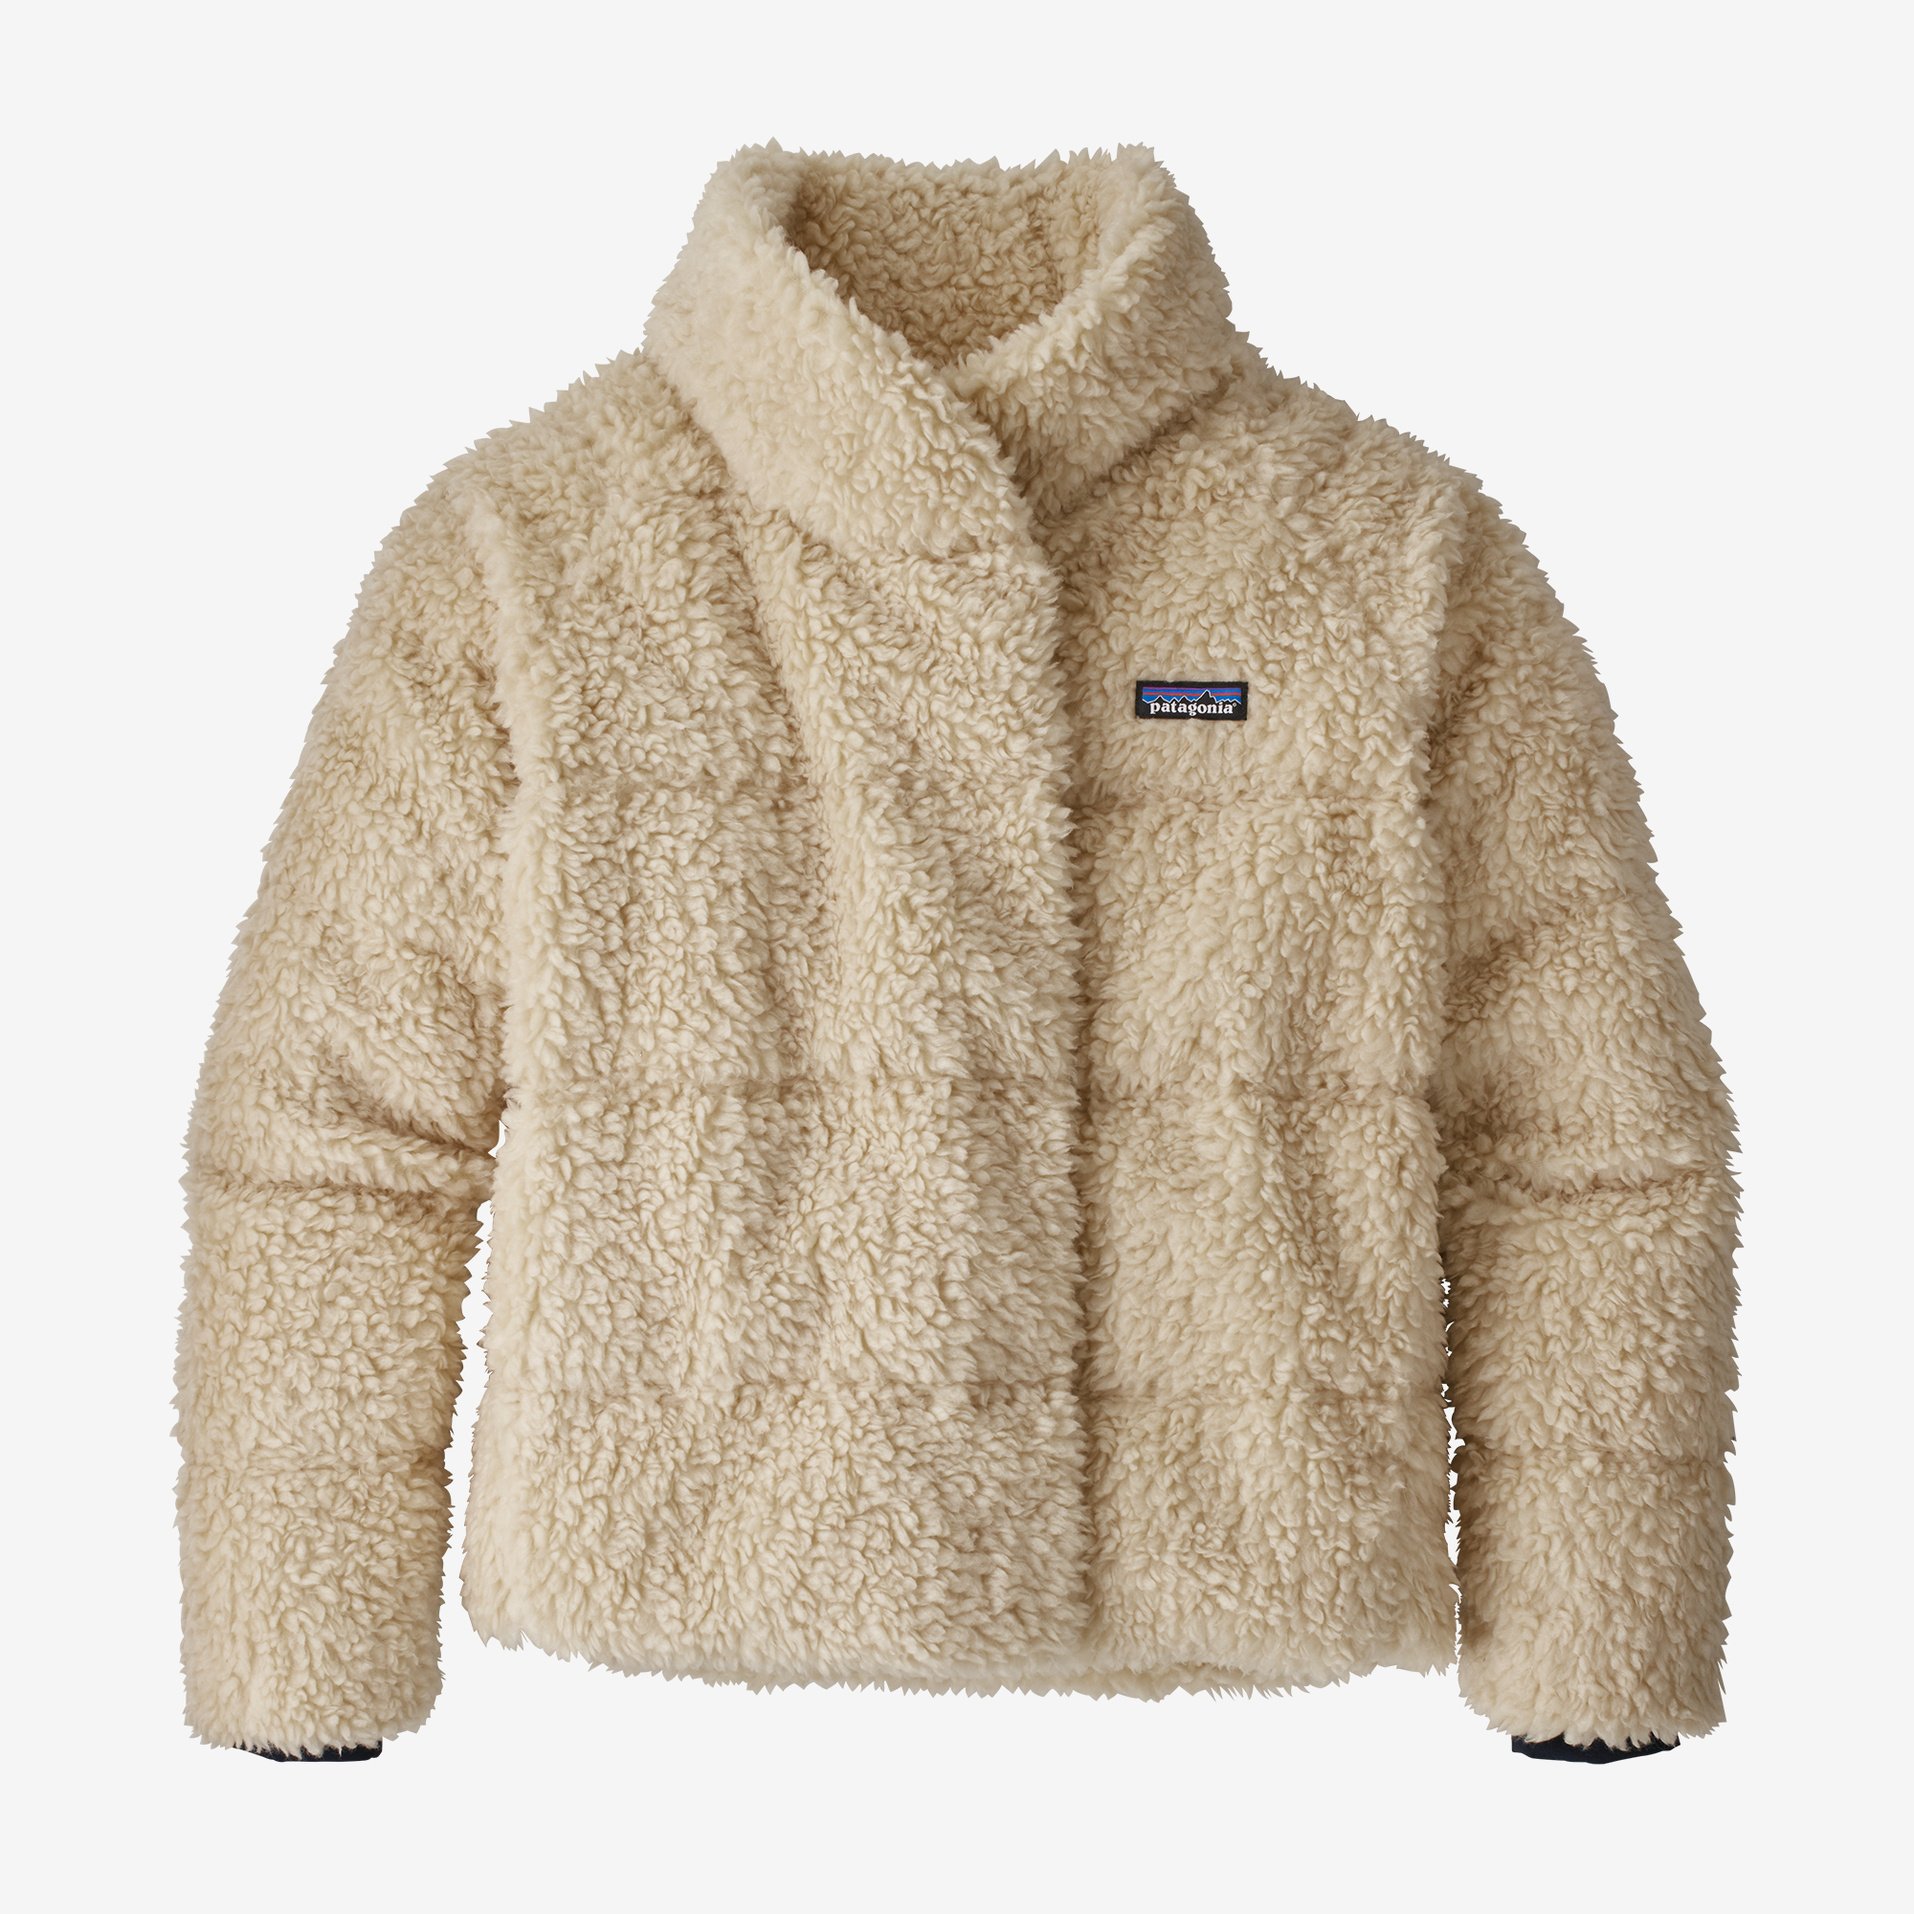 PATAGONIA recycled fleece jacket